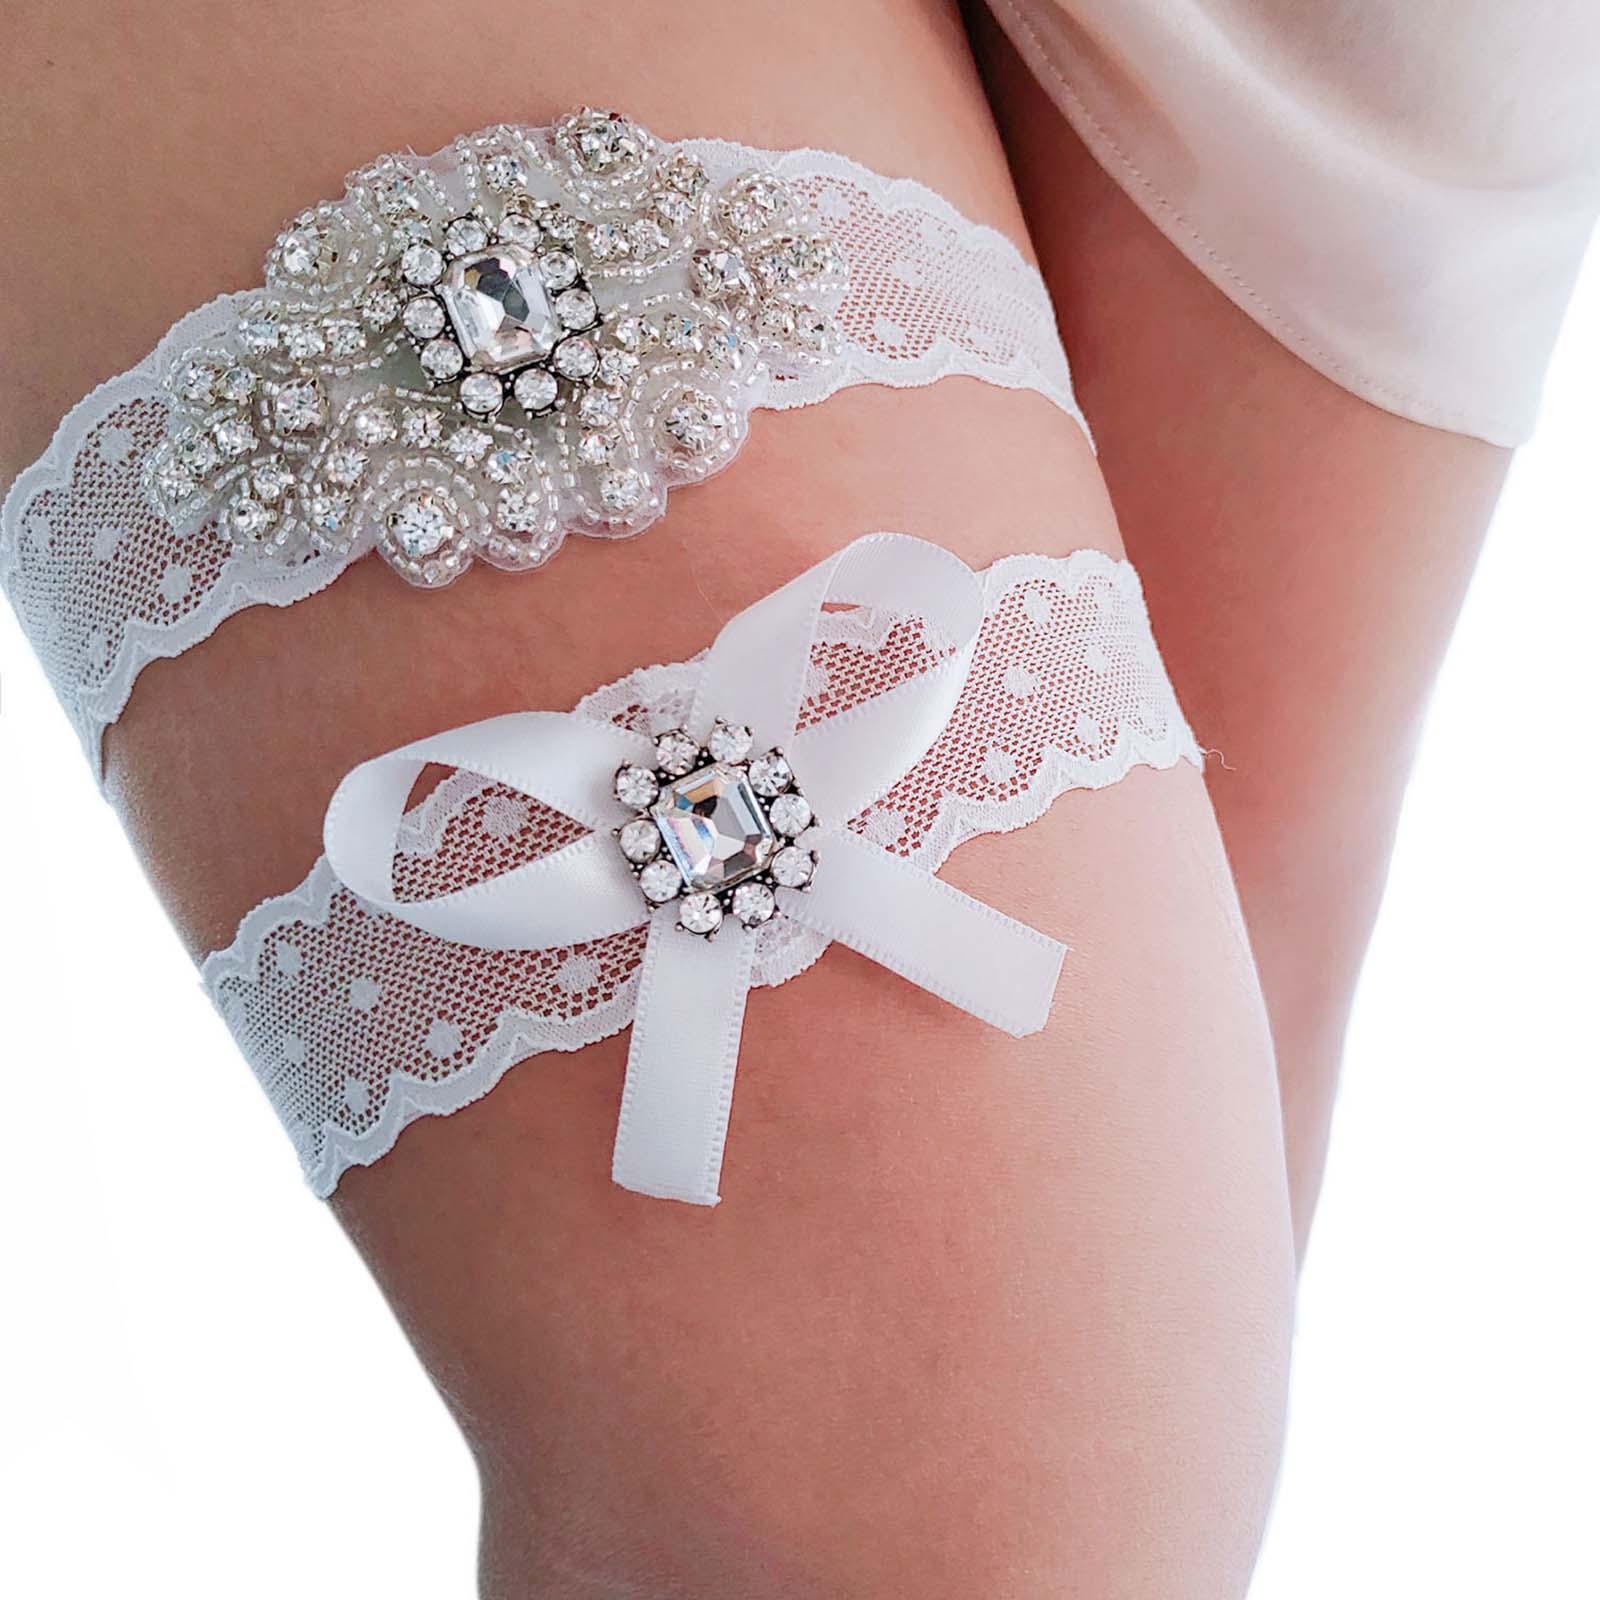 2x Wedding Bridal Garters Belt Stretch Adjustable Bridal Leg Garters Set Bowknot Lace Garters for Night Club Prom Halloween Masquerade